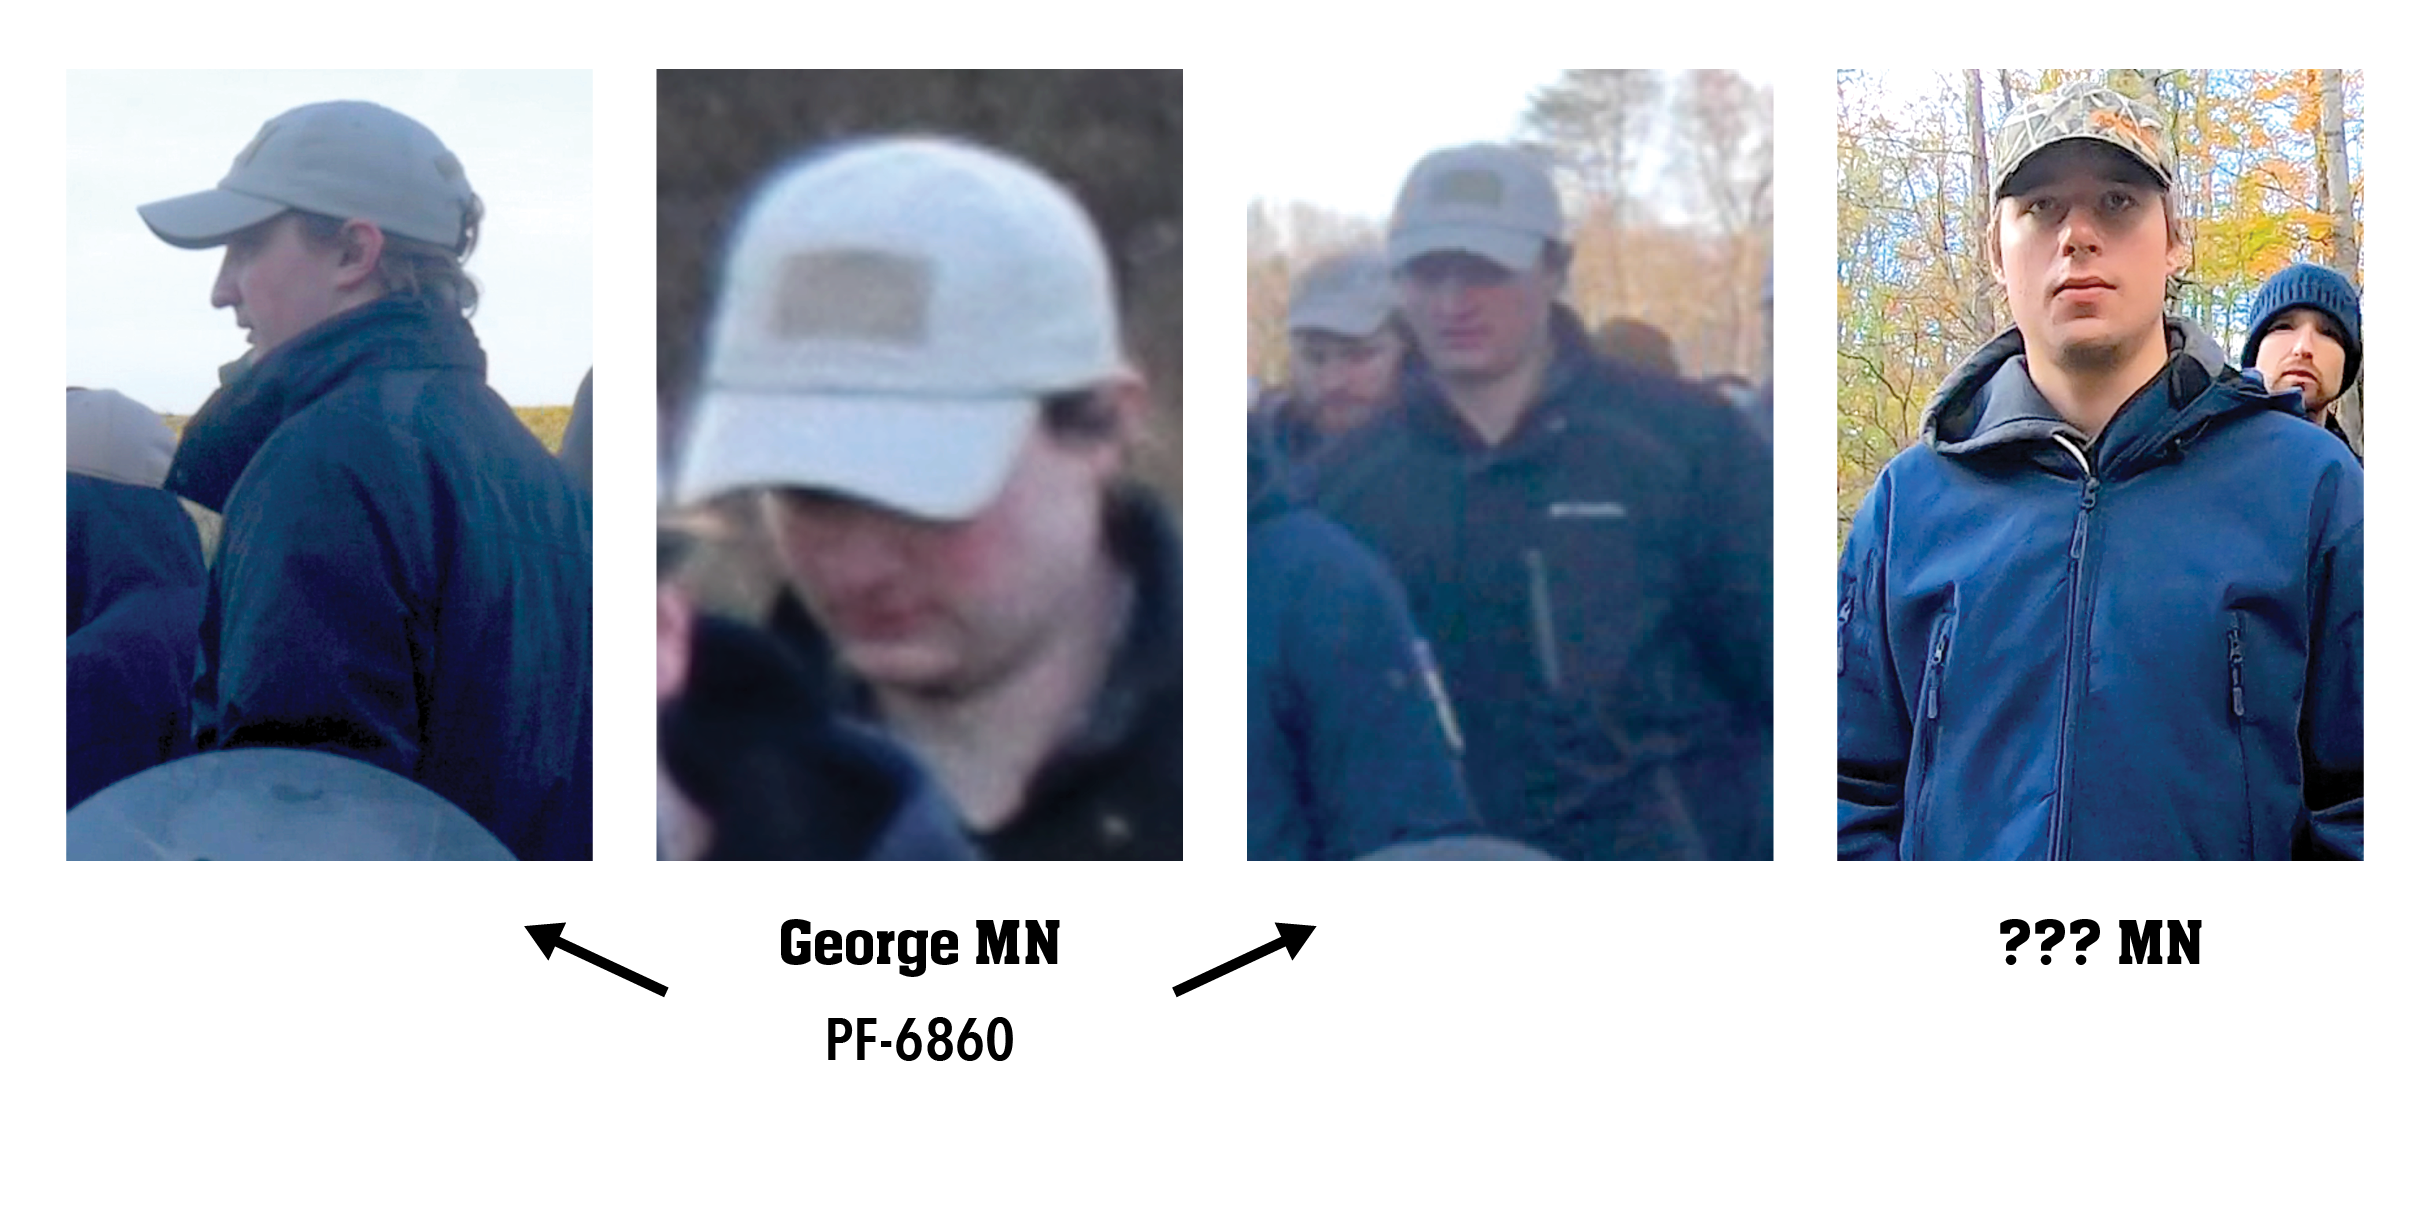 Minnesota Patriot Front Members